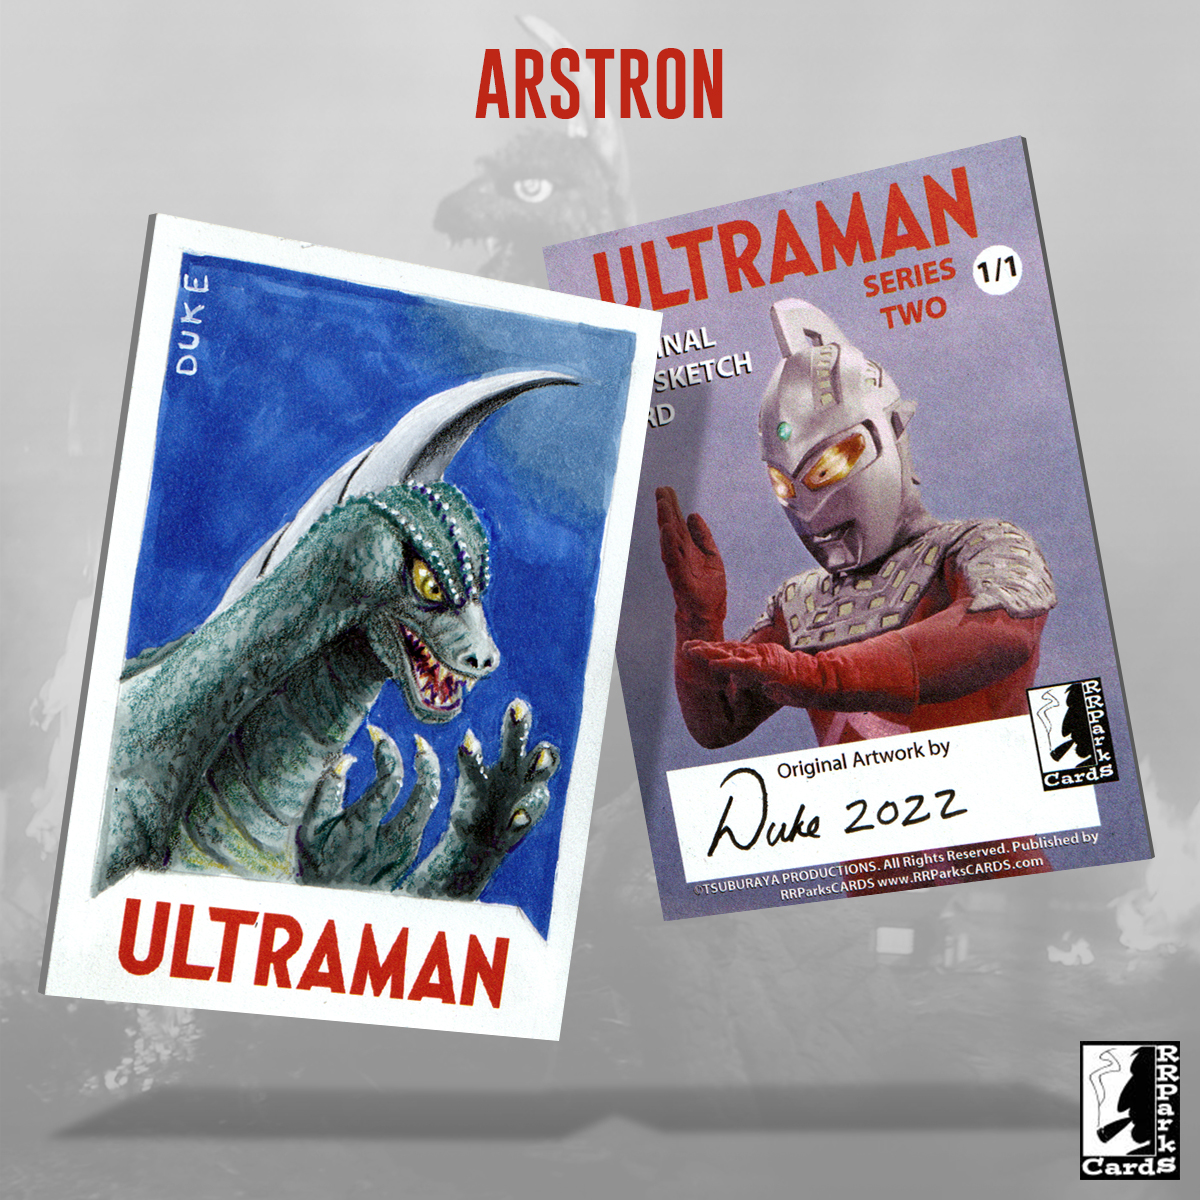 Ultraman Series 2 Arstron Sketch Card by Duke